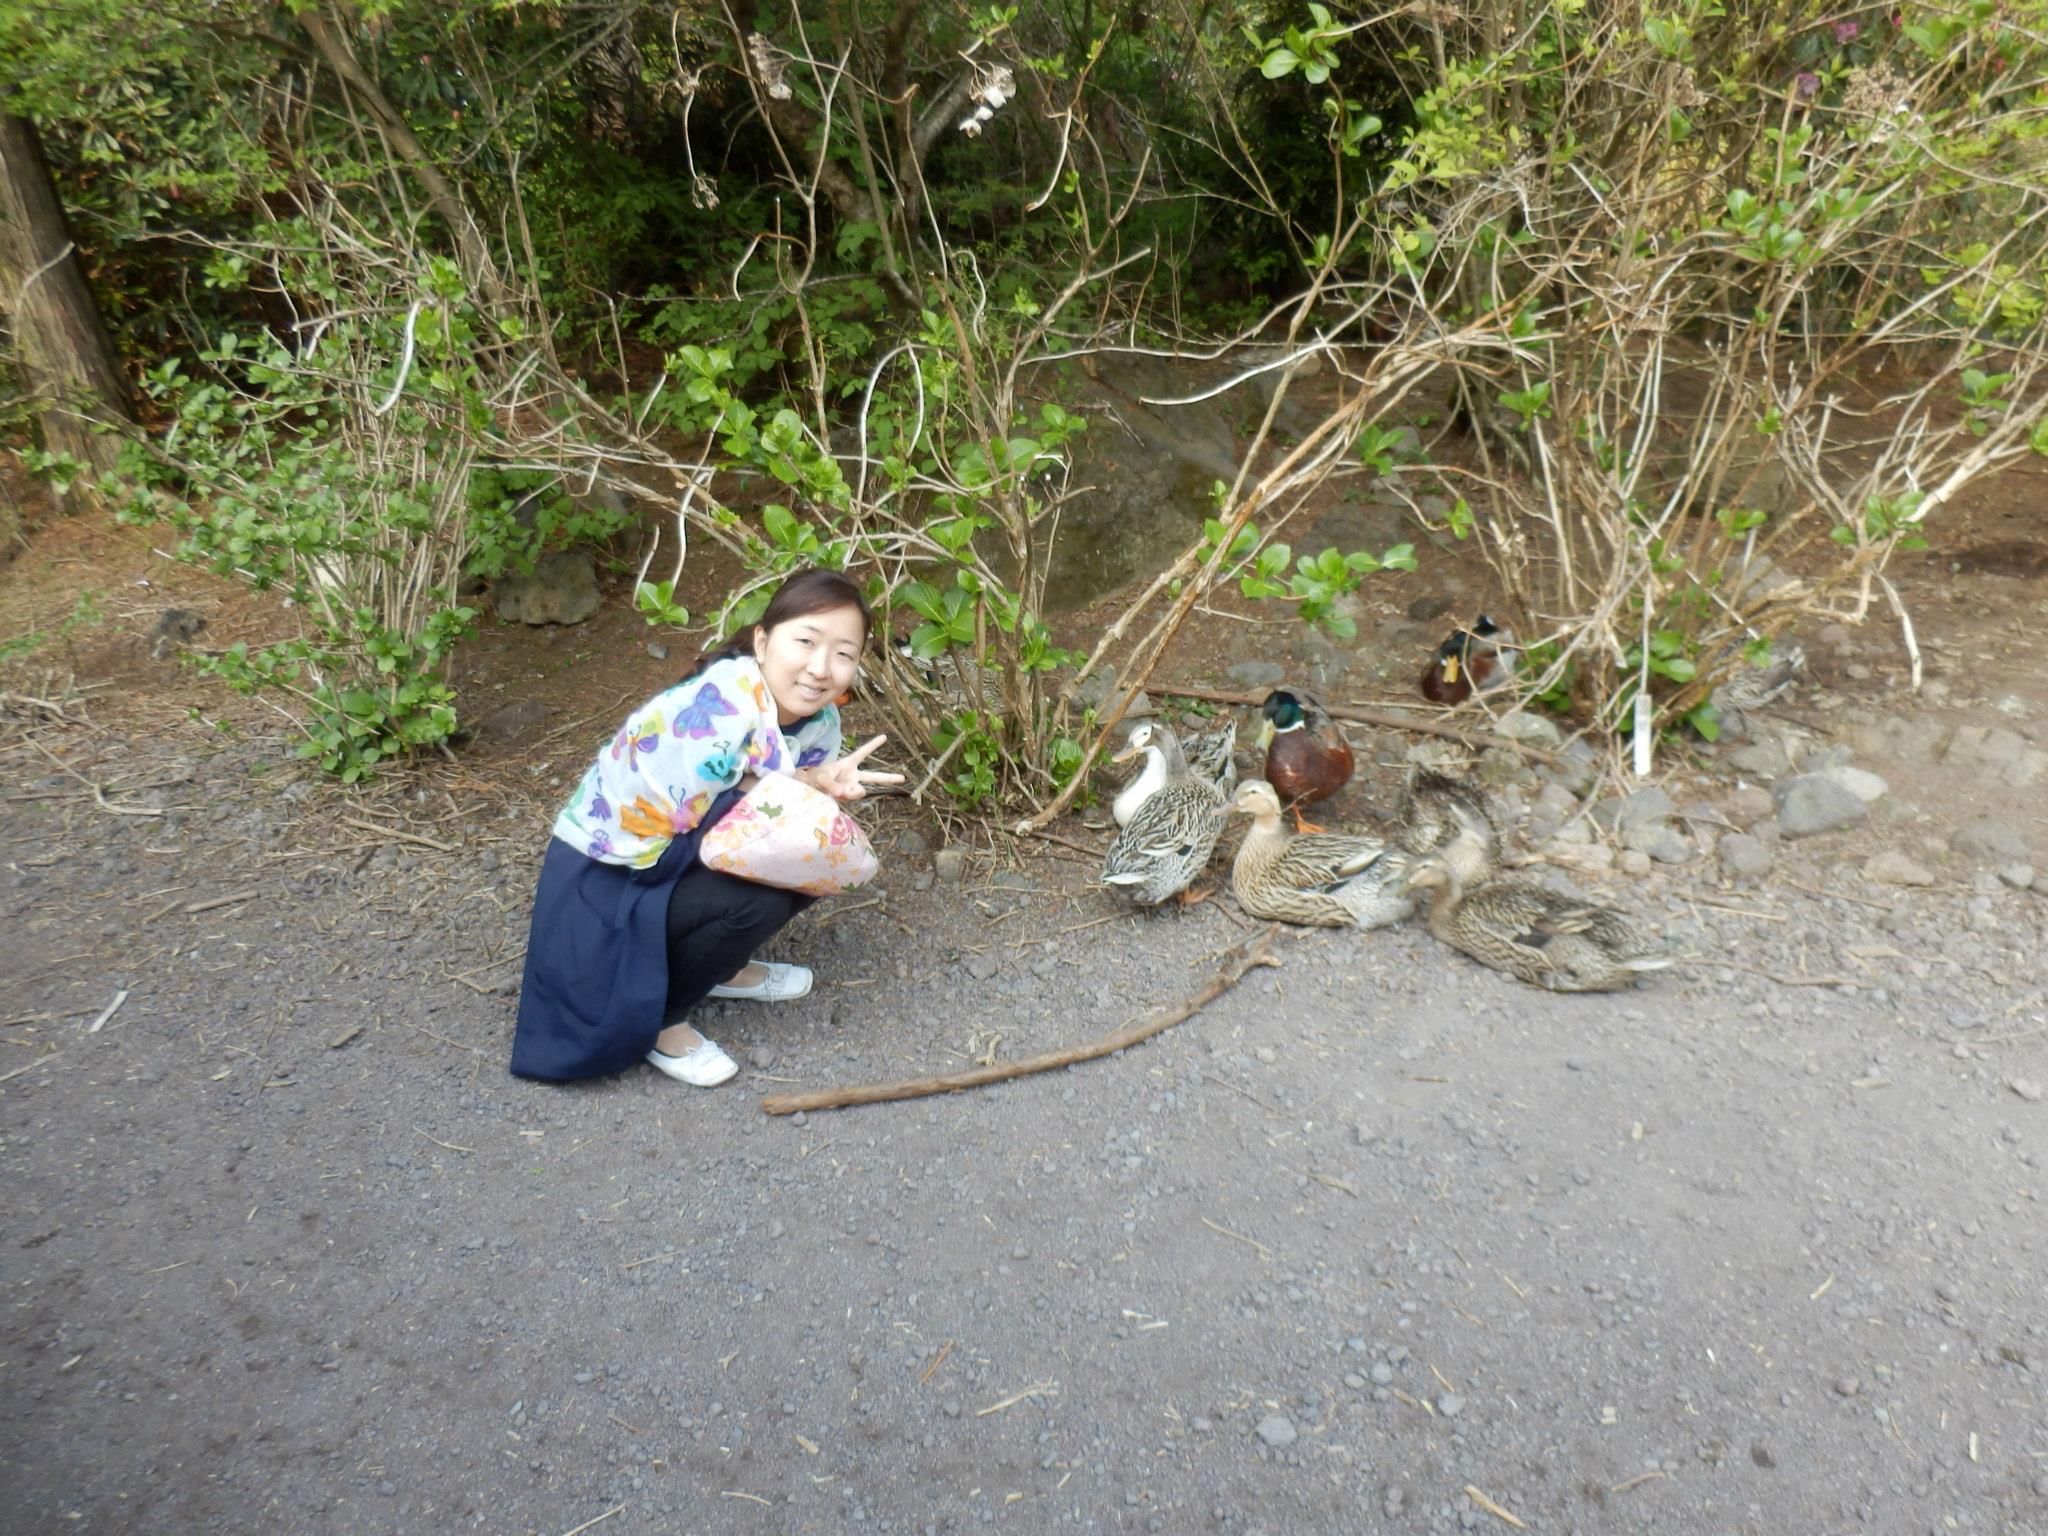 Akiko found some ducks by the lake